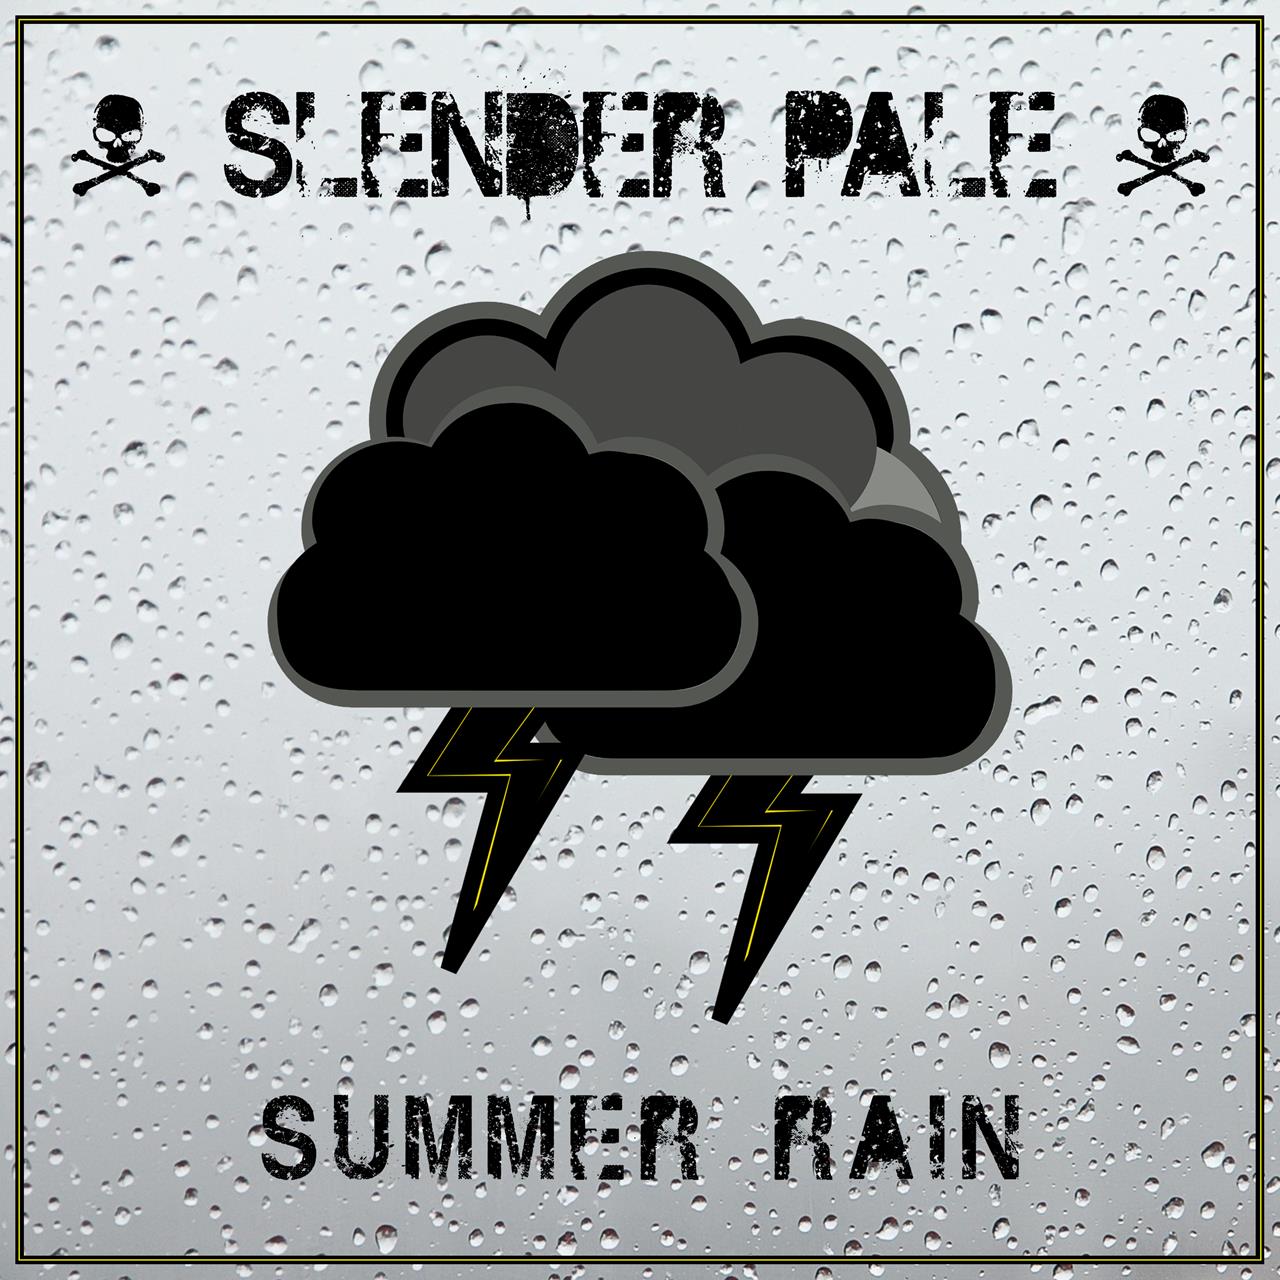 Summer Rain - cover art